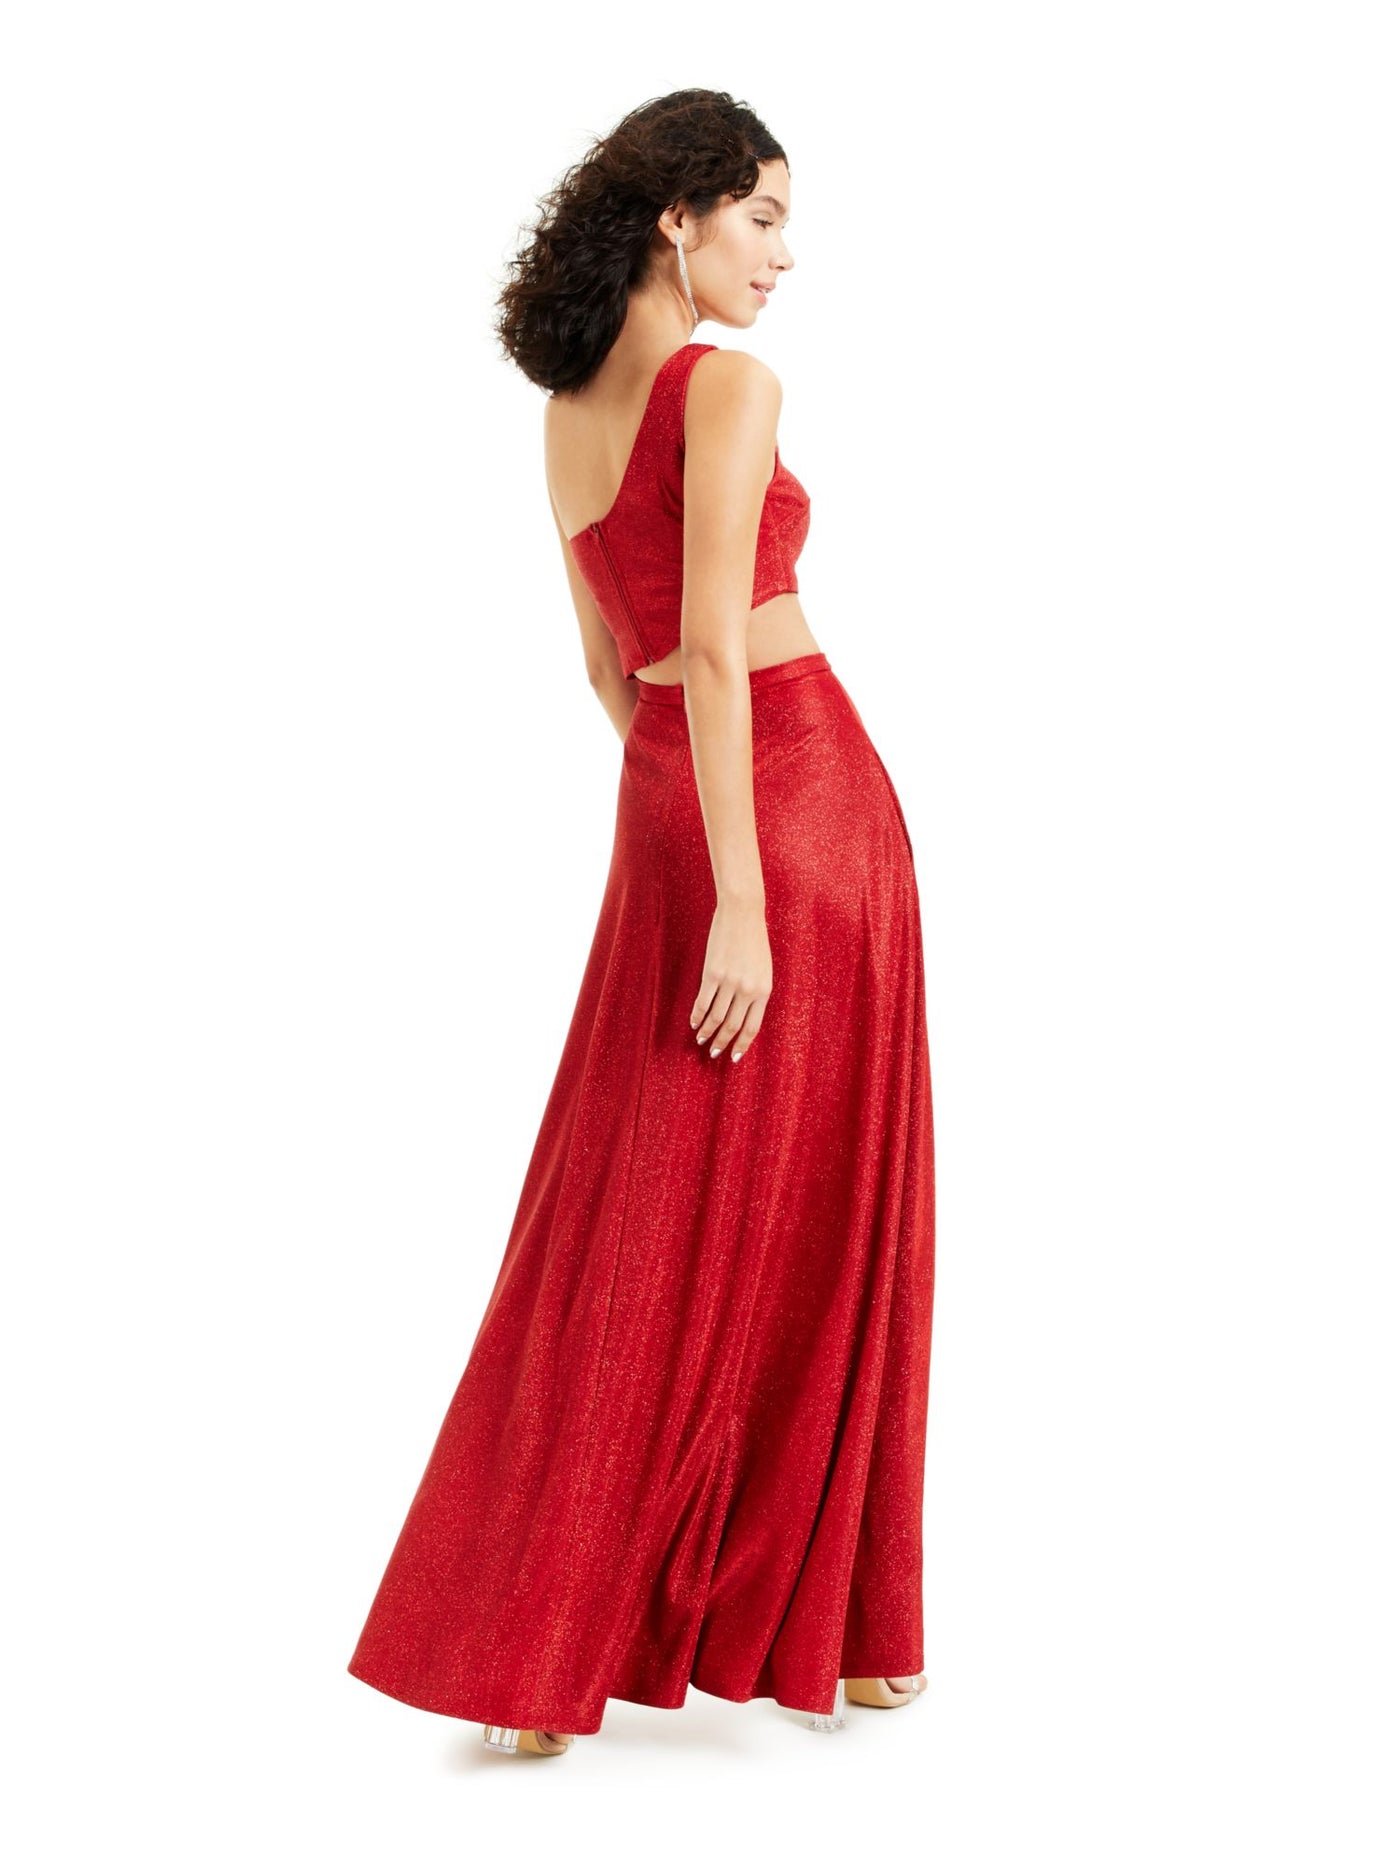 CITY STUDIO Womens Red Glitter Cut Out Pocketed Sleeveless Asymmetrical Neckline Maxi Prom Dress Juniors 5